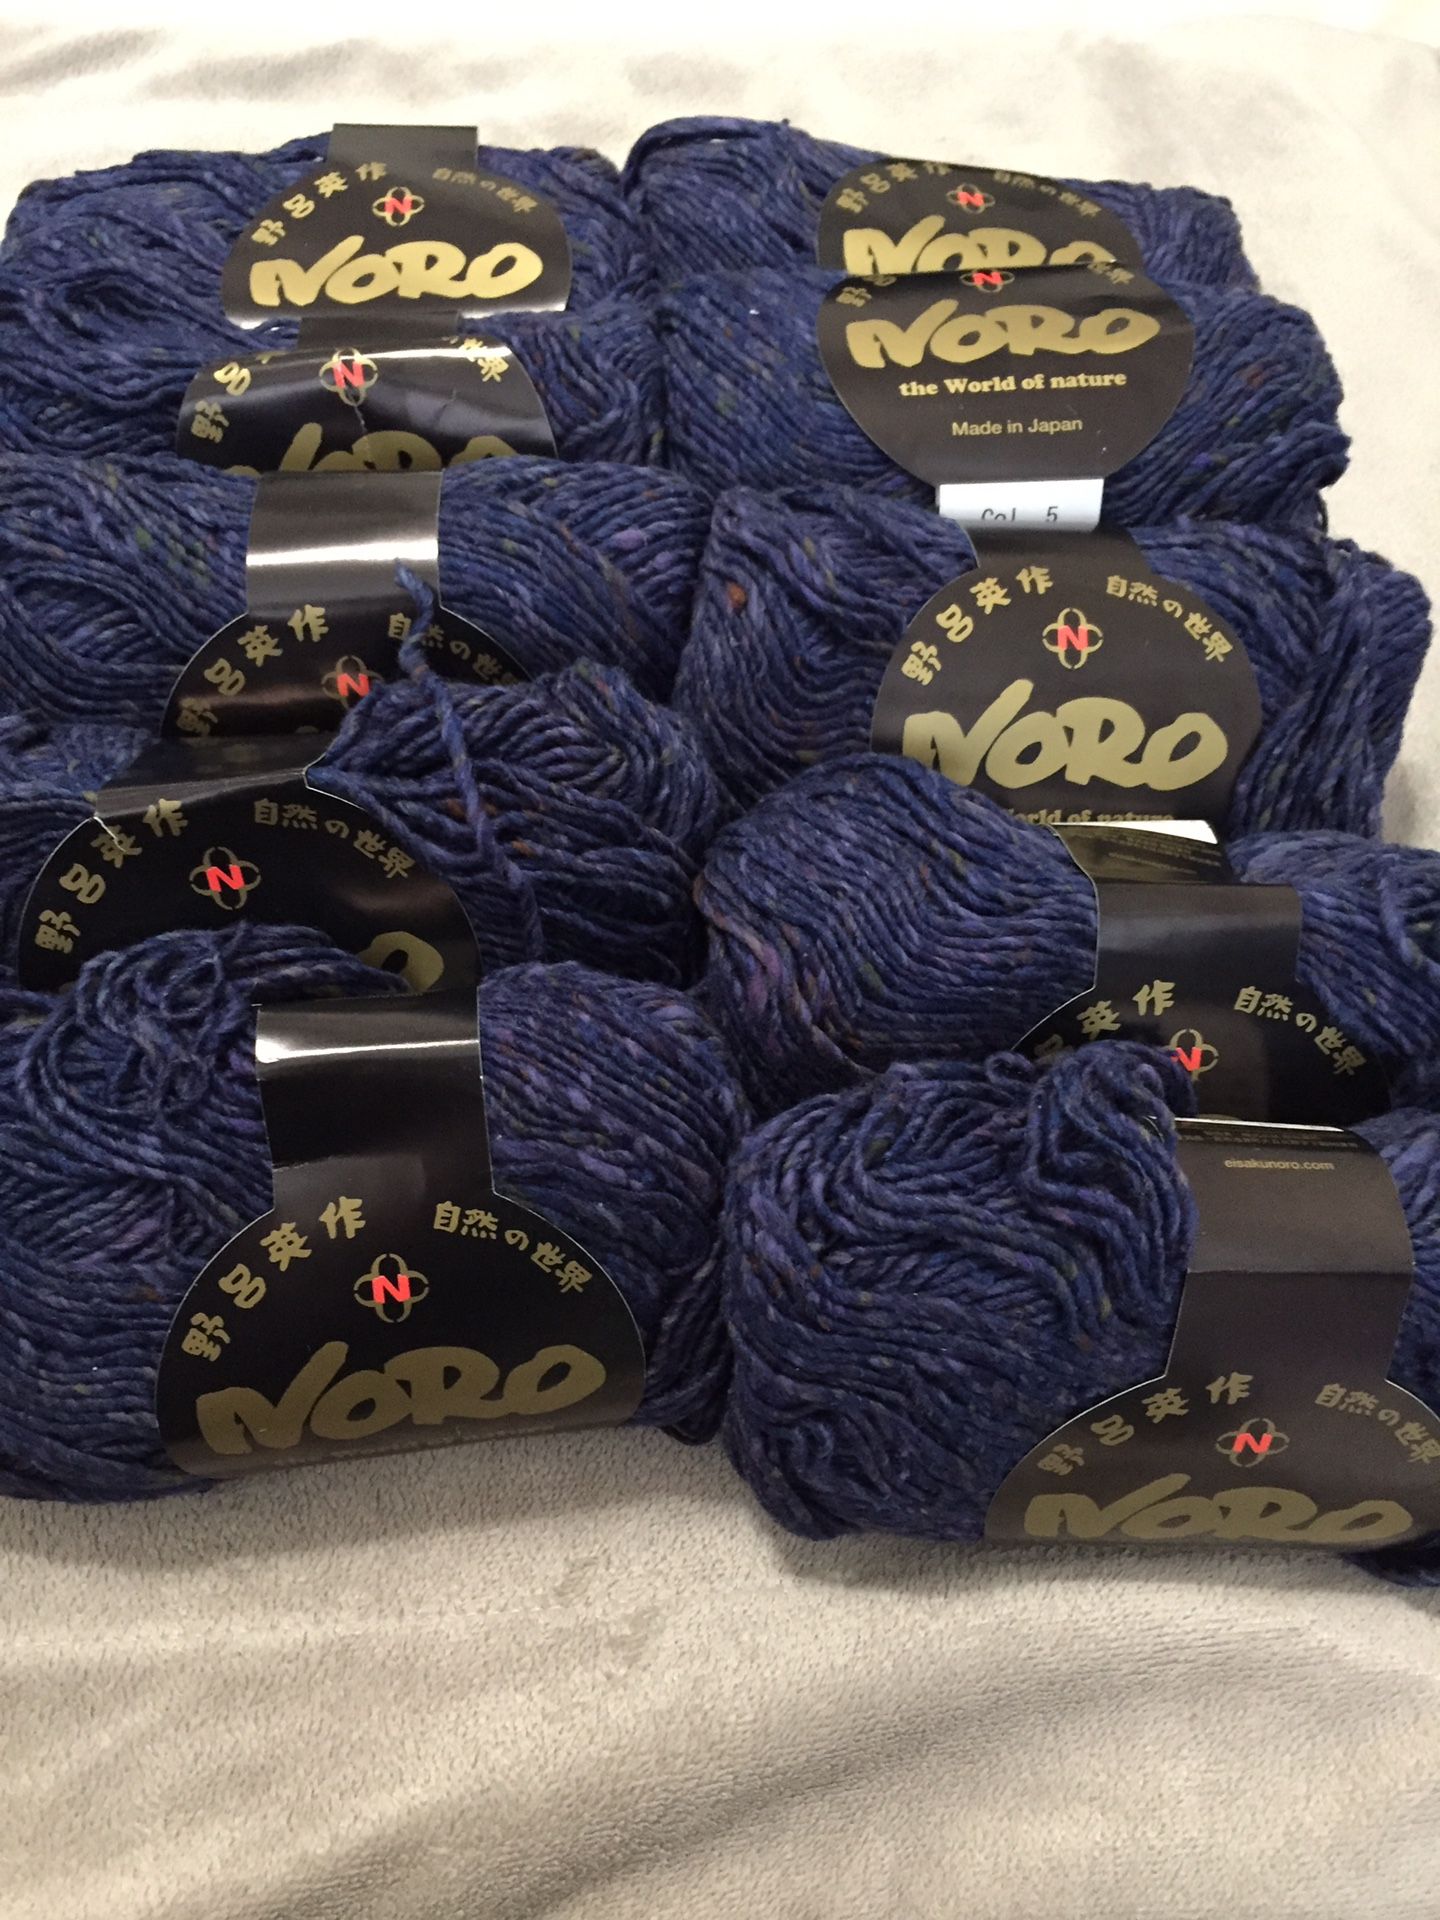 10 balls of High quality yarn NORO